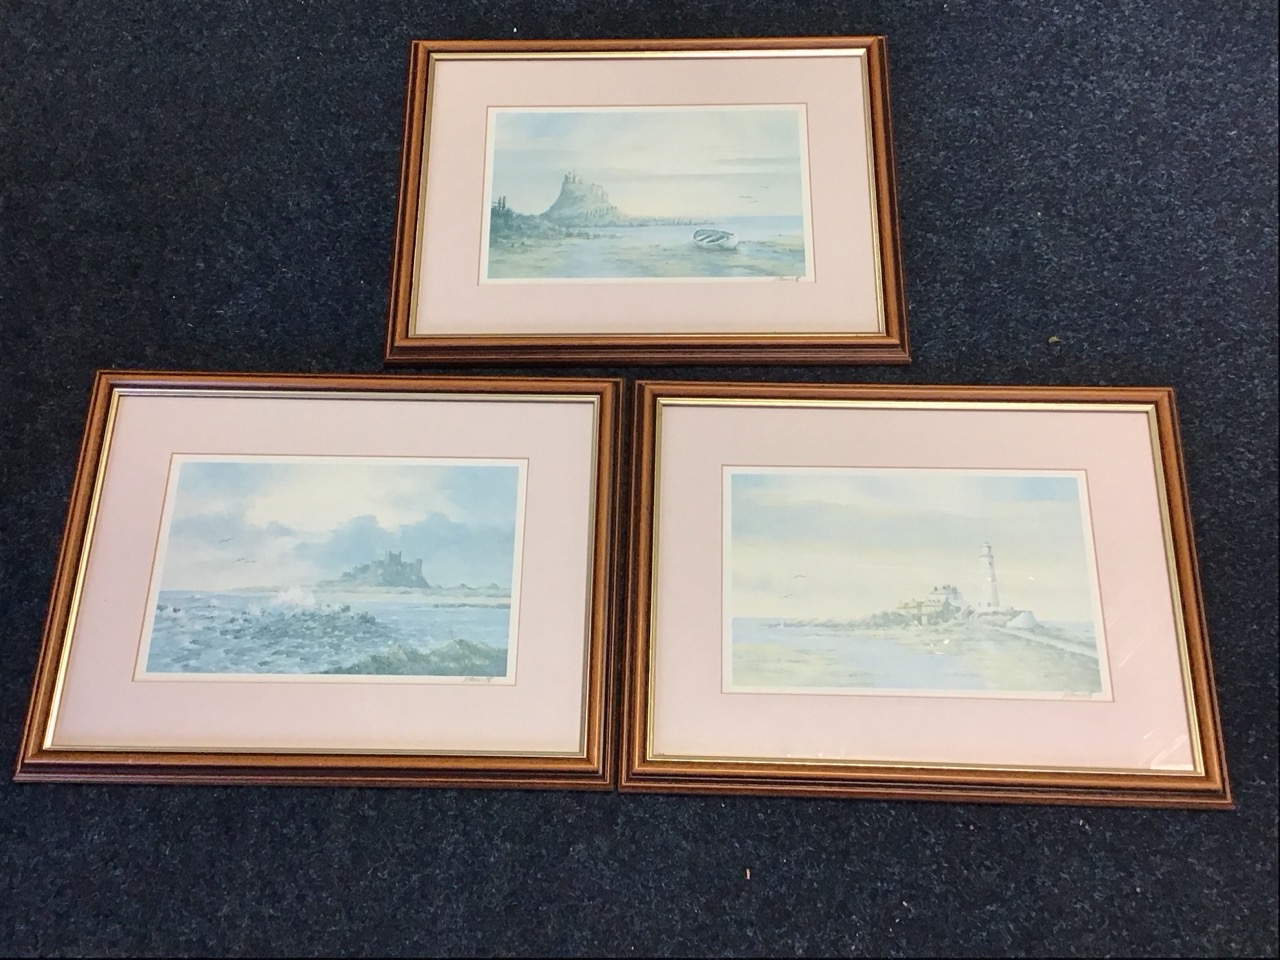 D Fenwick, a set of three coloured prints, Northumbrian coastal scenes - St Marys Island, Bamburgh